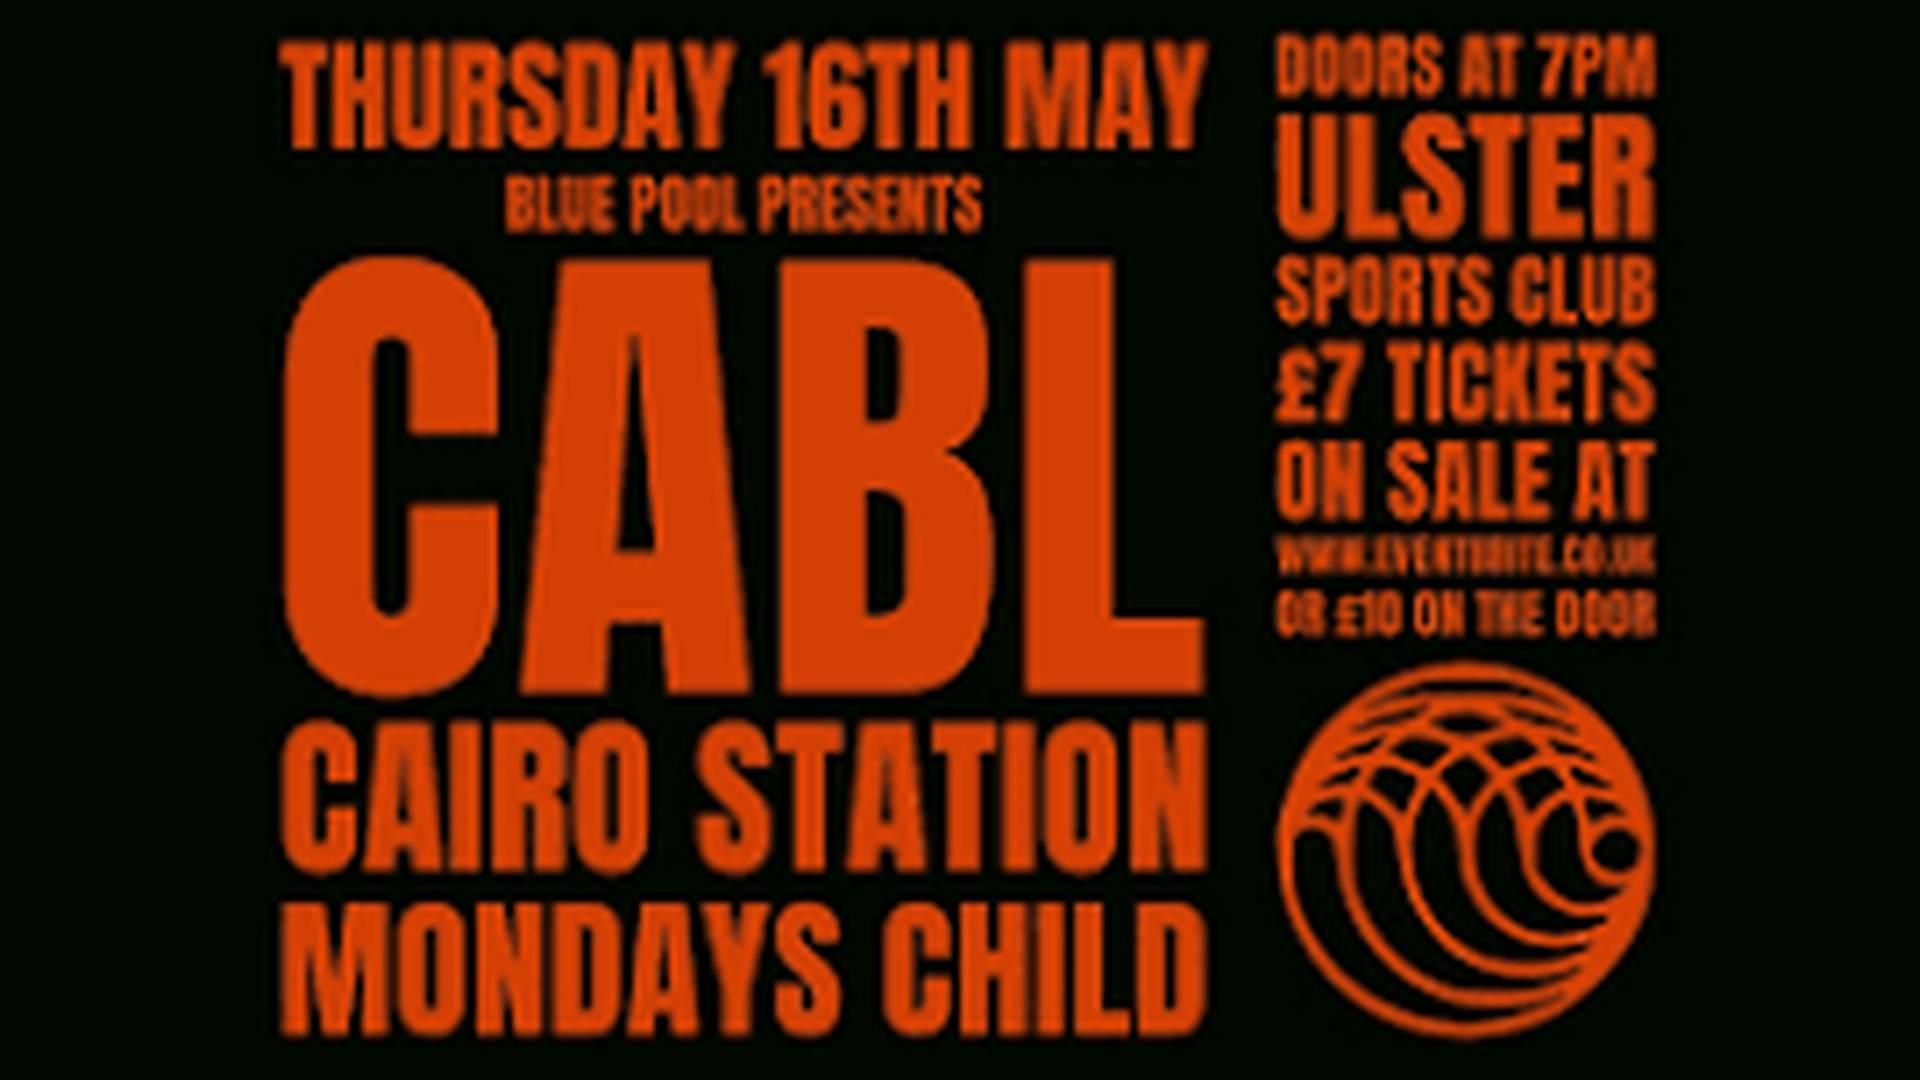 Blue Pool Presents - CABL, Cairo Station & Monday's Child LIVE @ USC photo